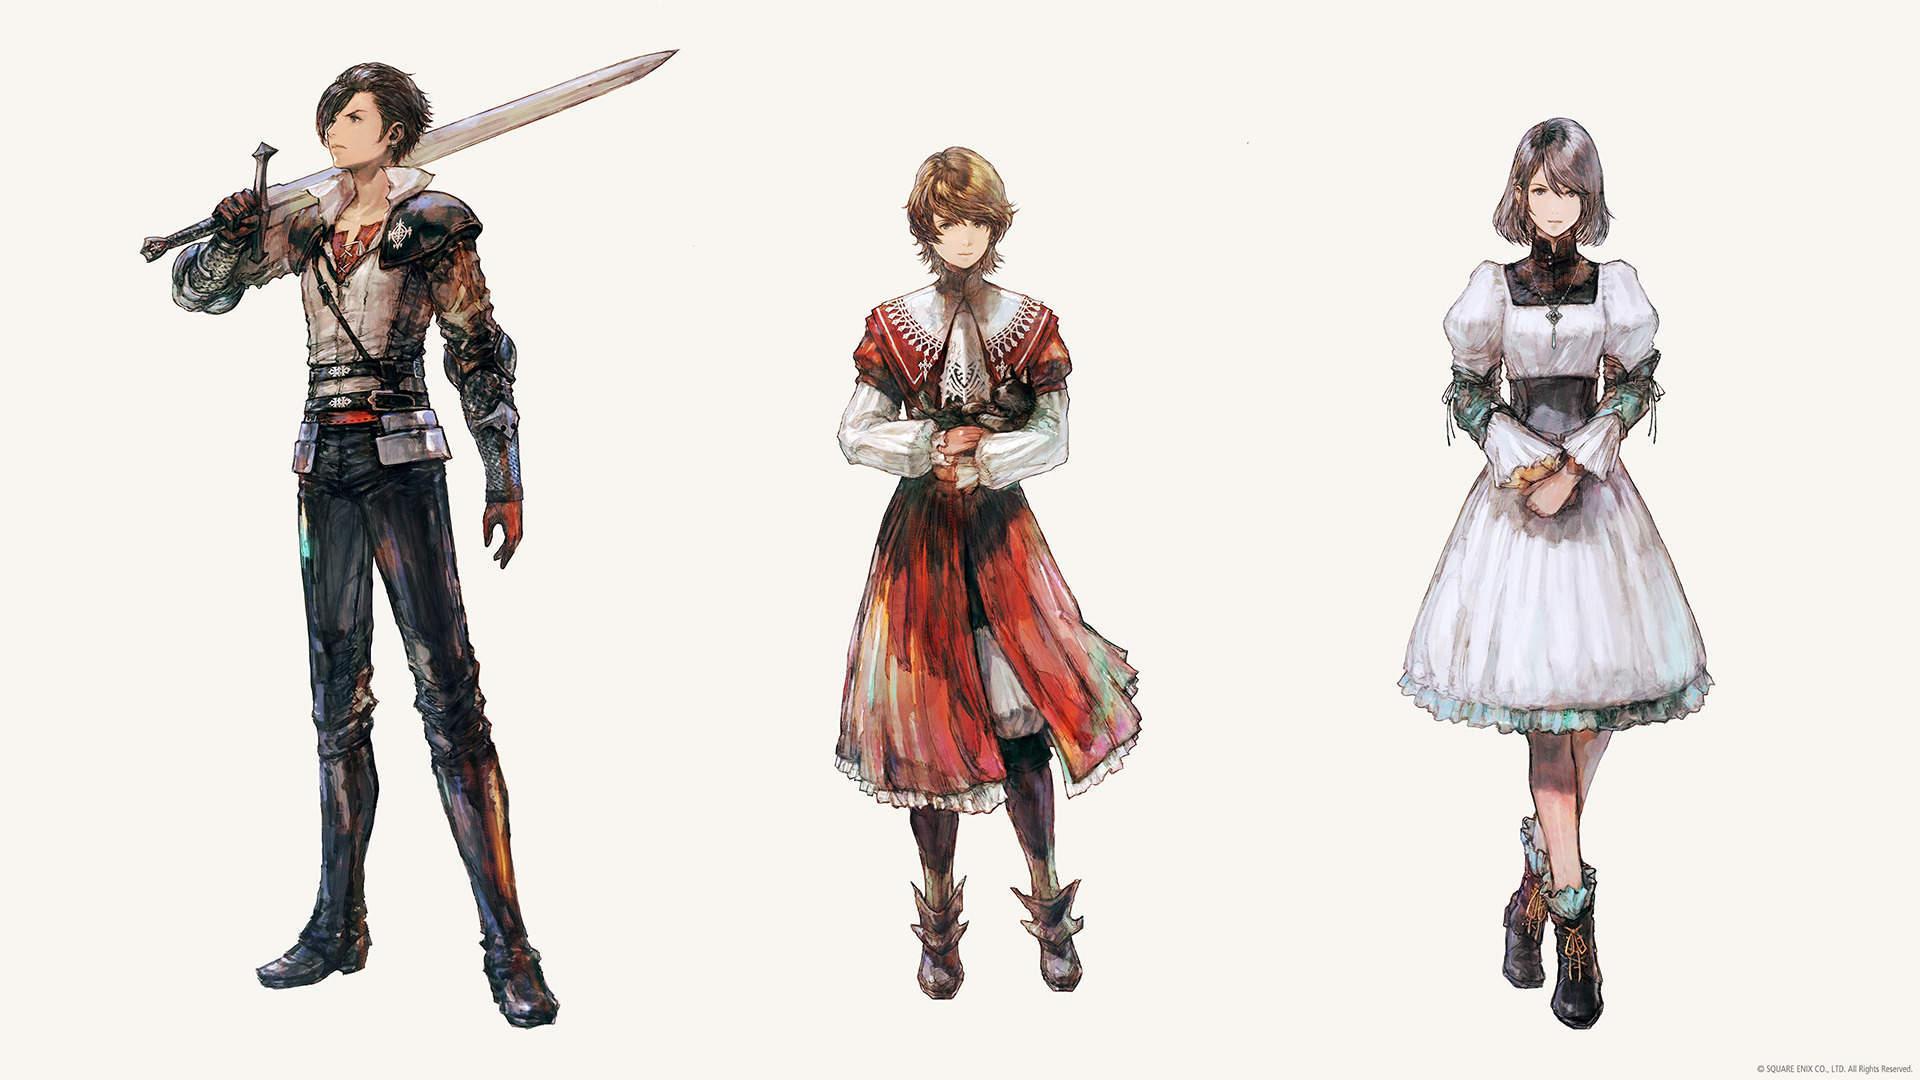 Clive, Joshua, and Jill from Final Fantasy 16